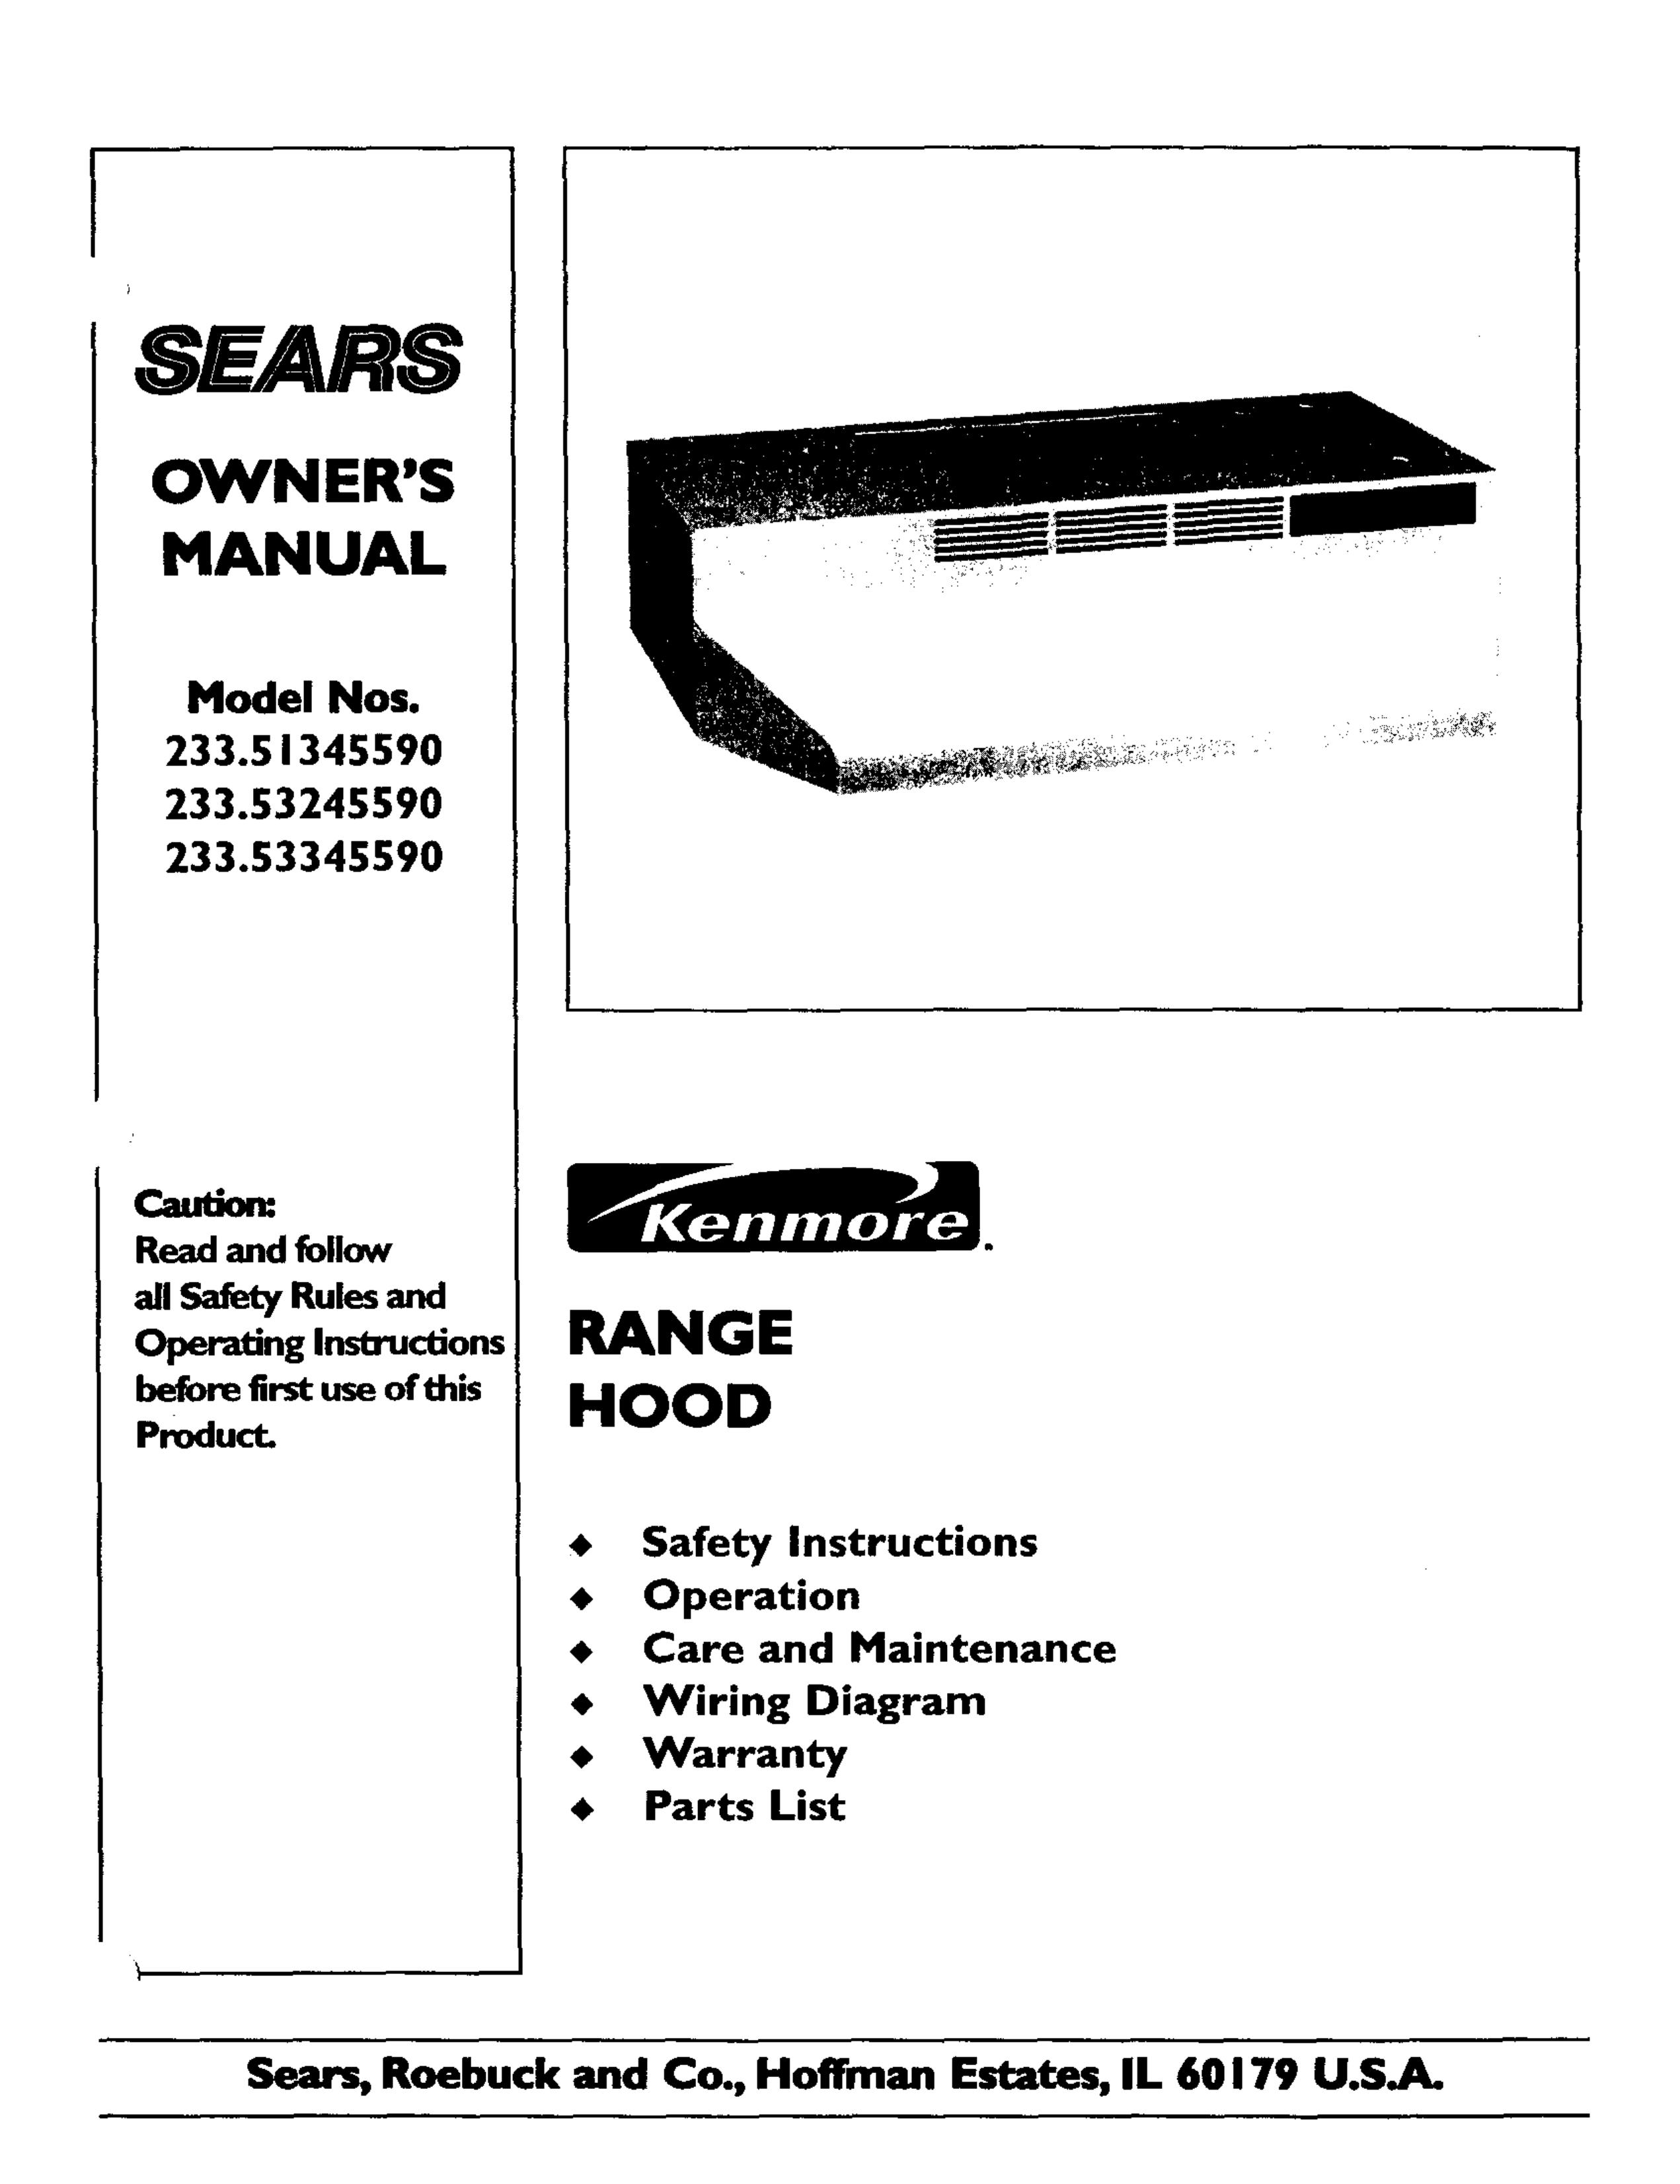 Sears 233.5334559 Ventilation Hood User Manual